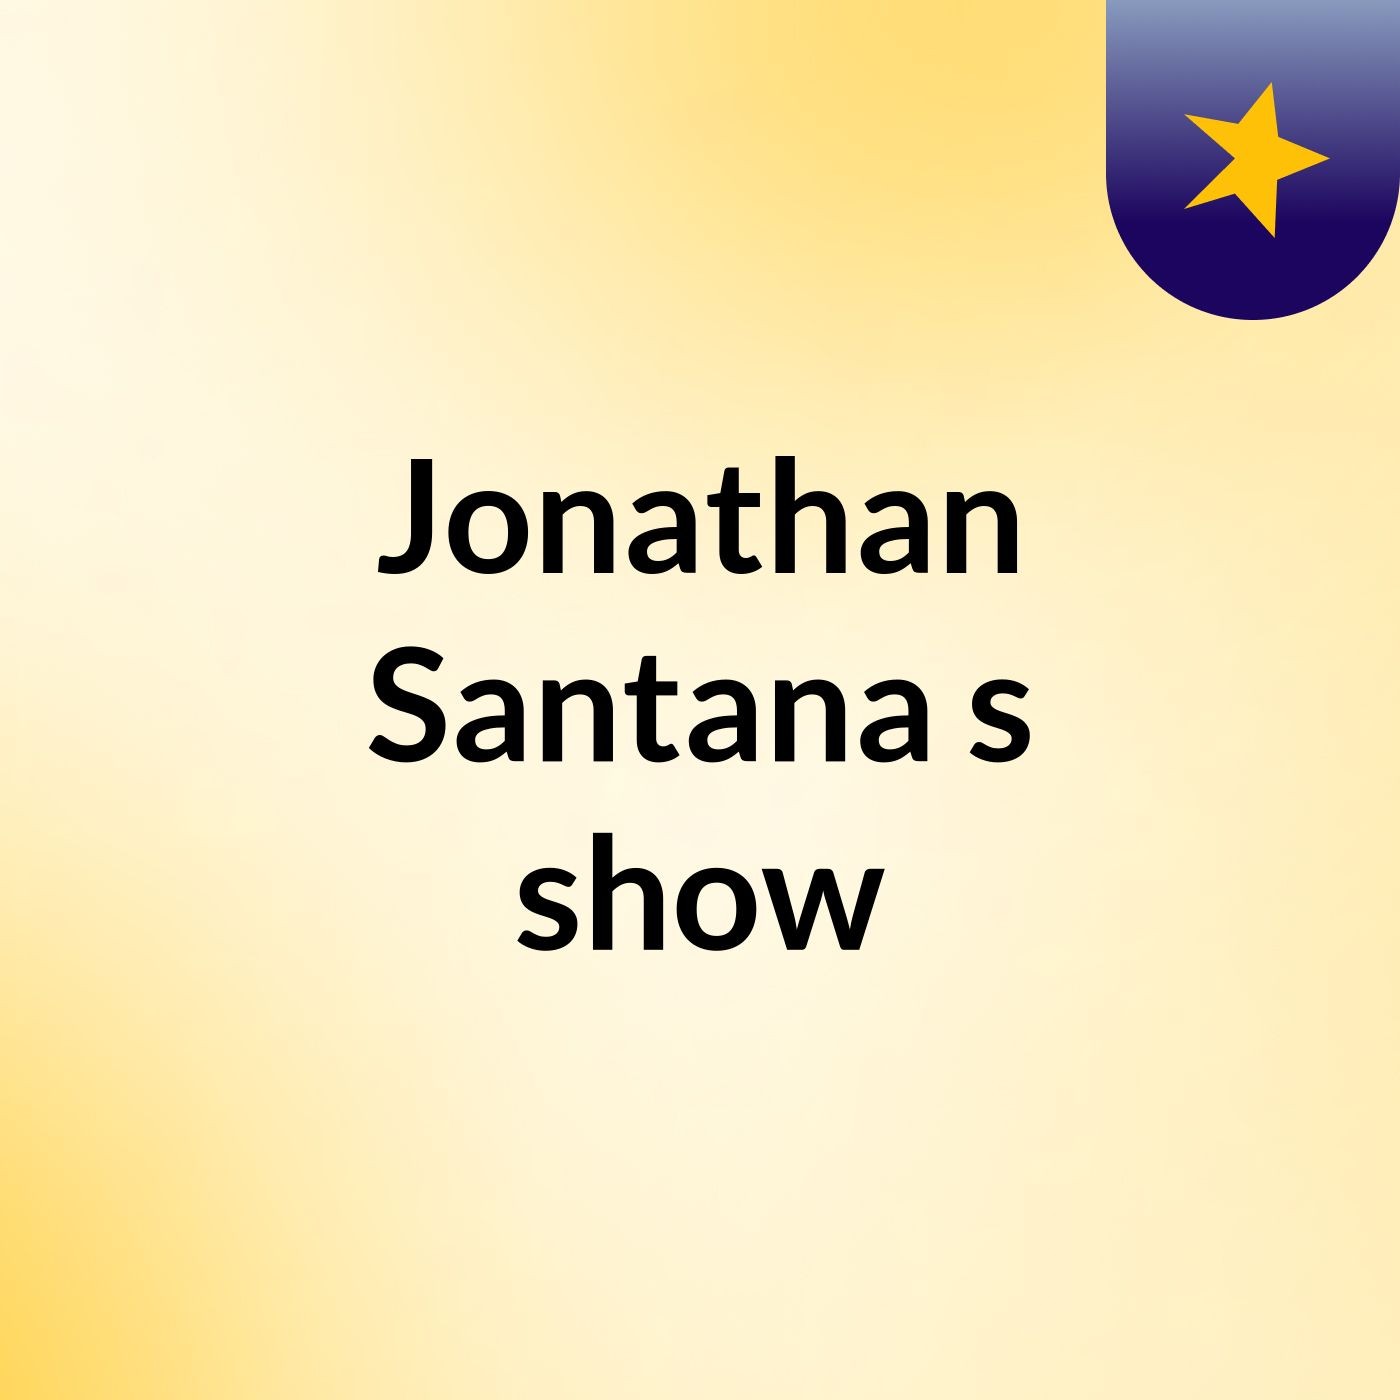 Jonathan Santana's show